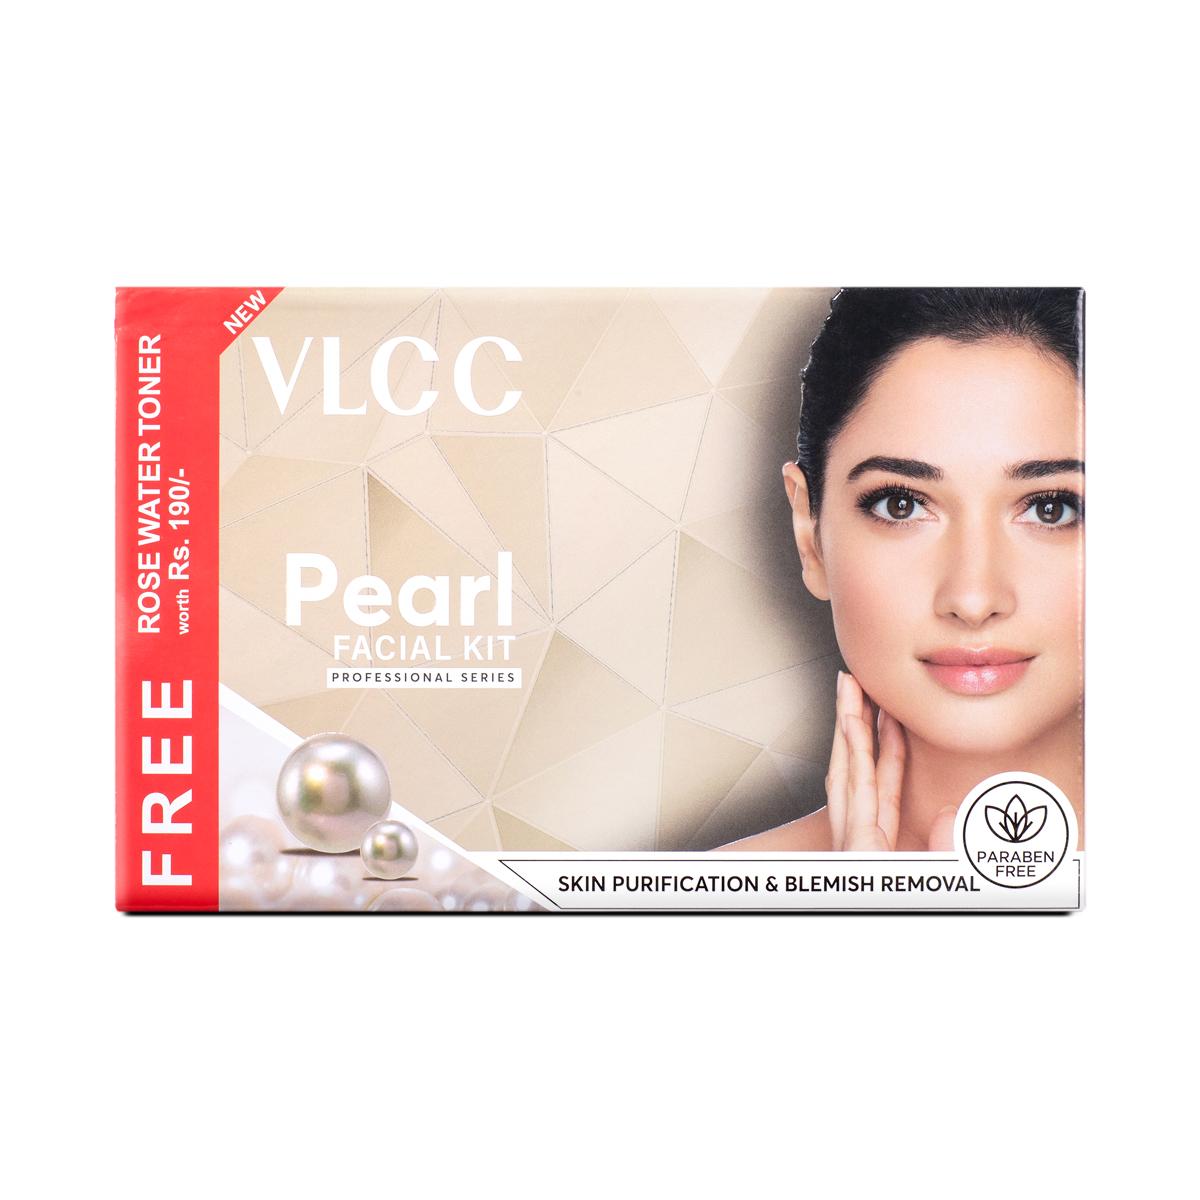 VLCC Pearl Facial Kit + FREE Rose Water Toner - Embrace the Power of Pearls